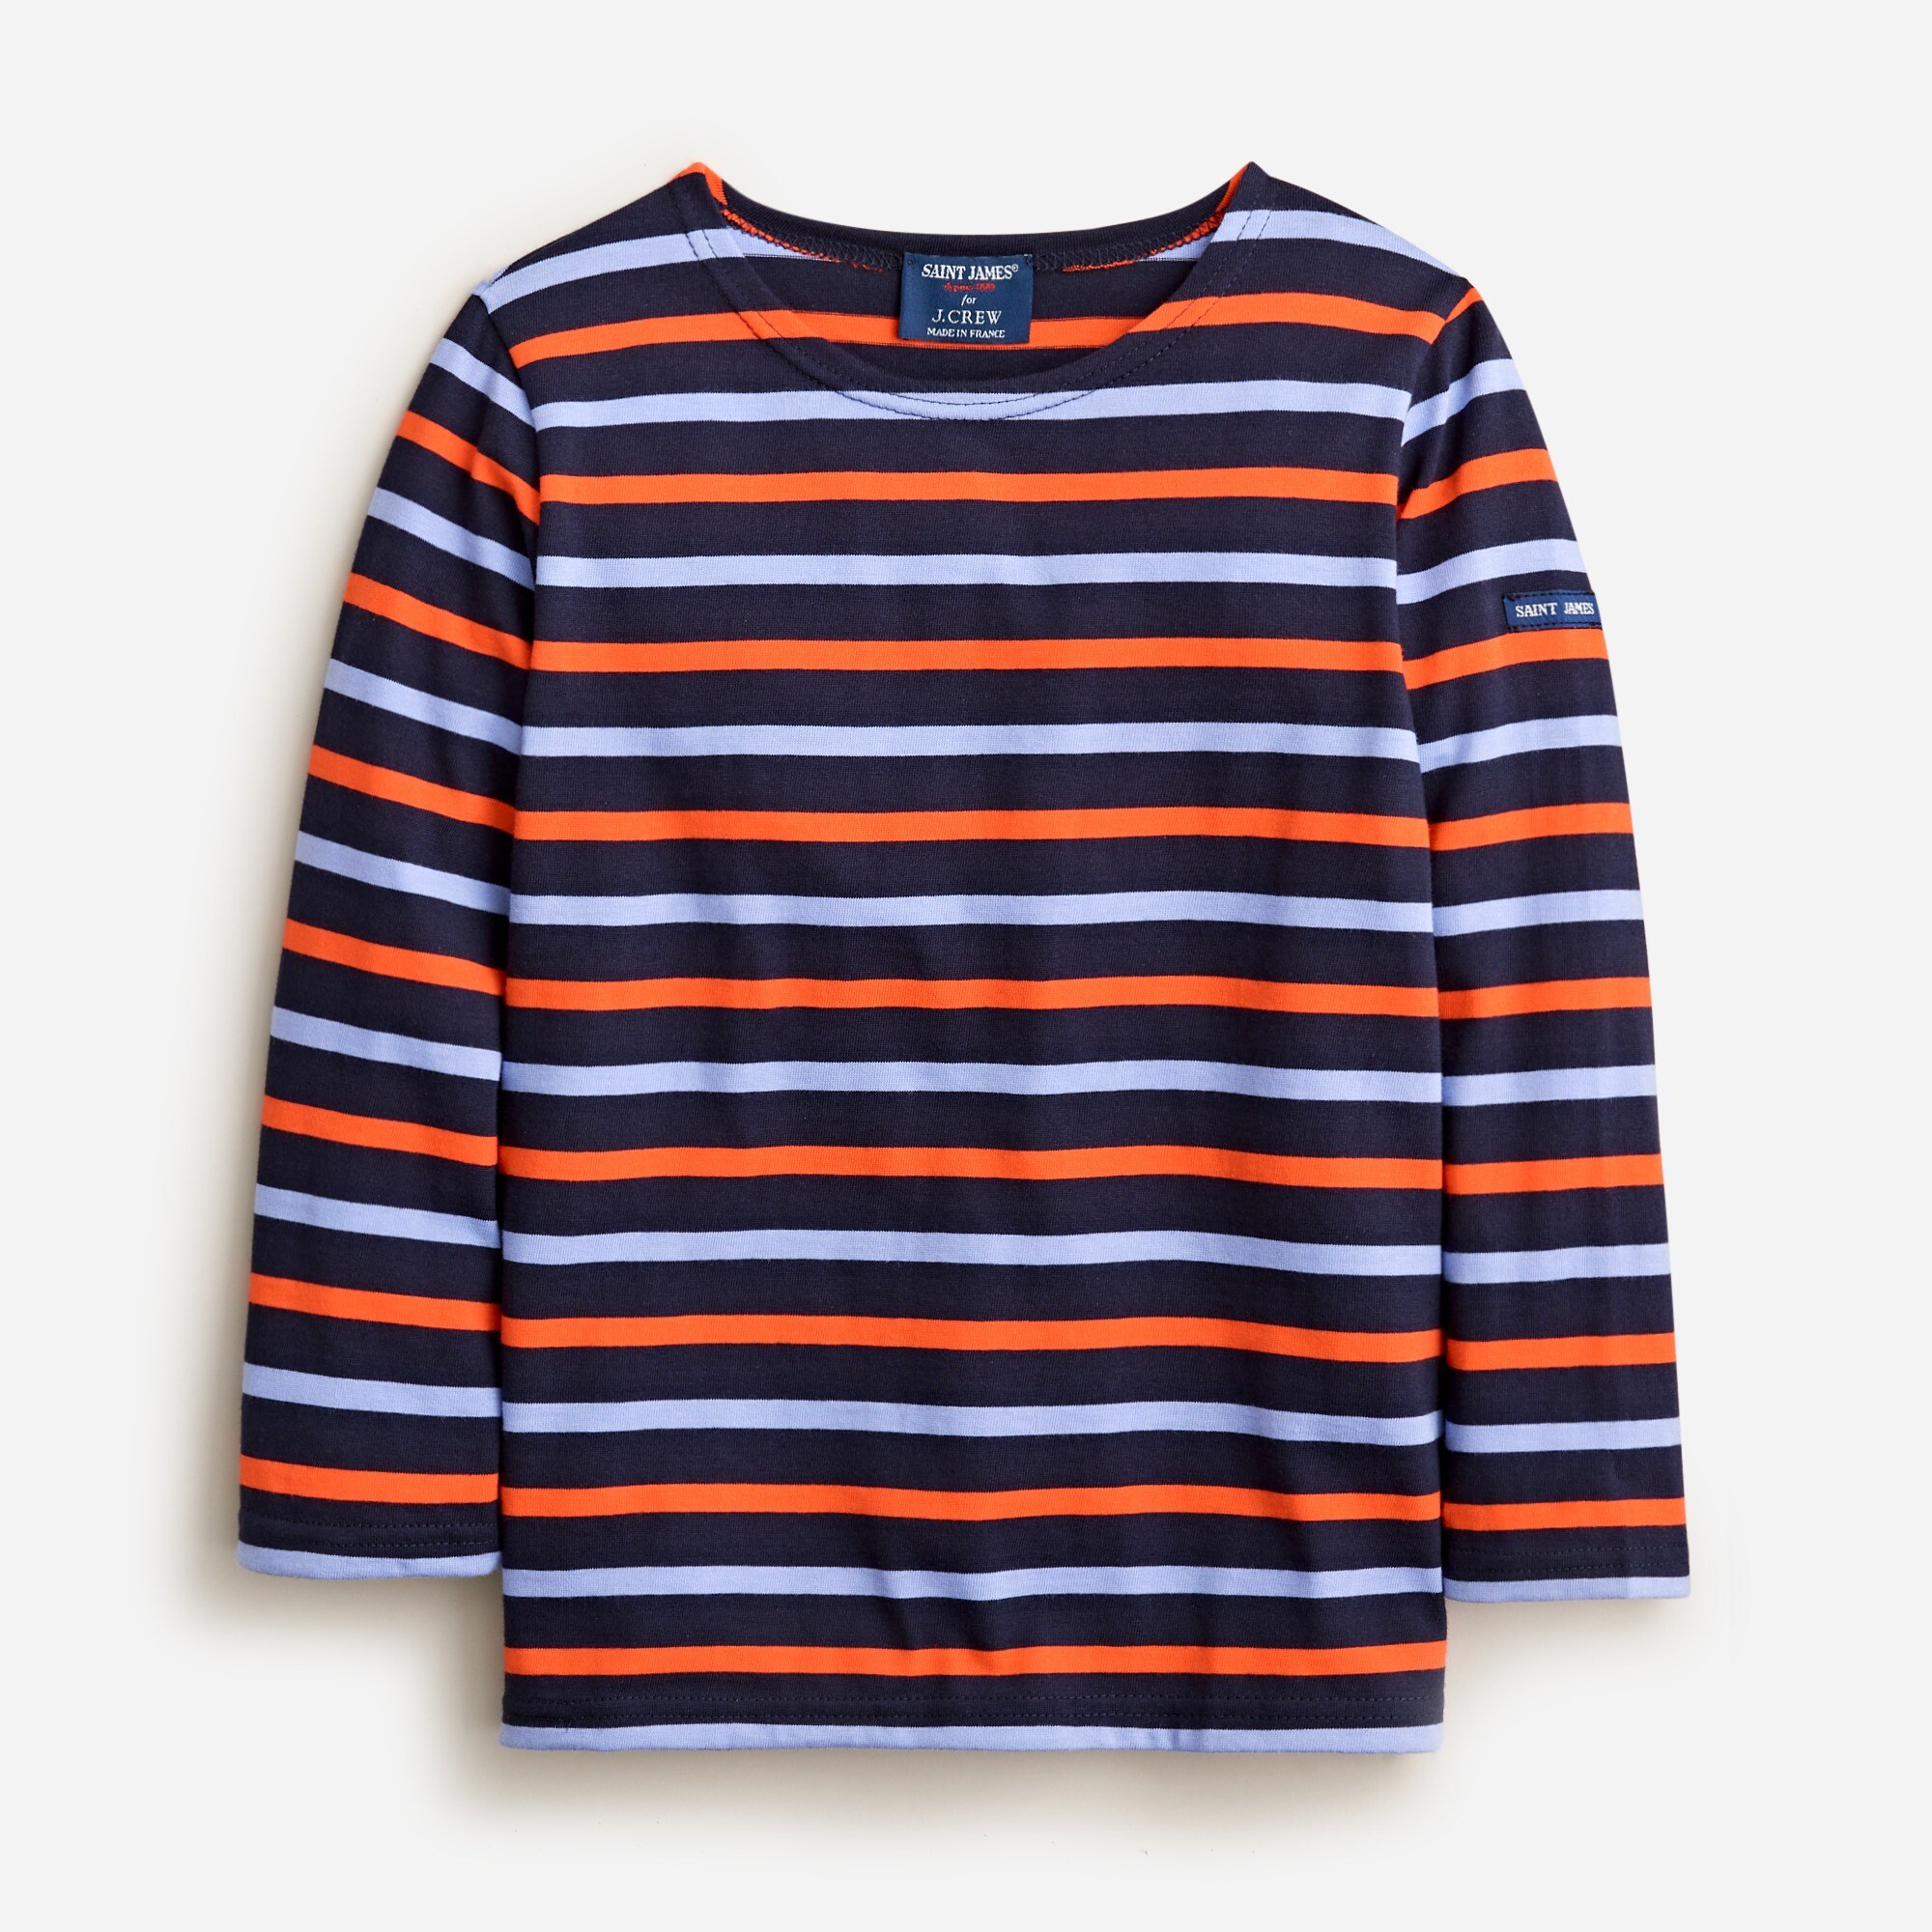  Saint James&reg; X crewcuts long-sleeve striped T-shirt